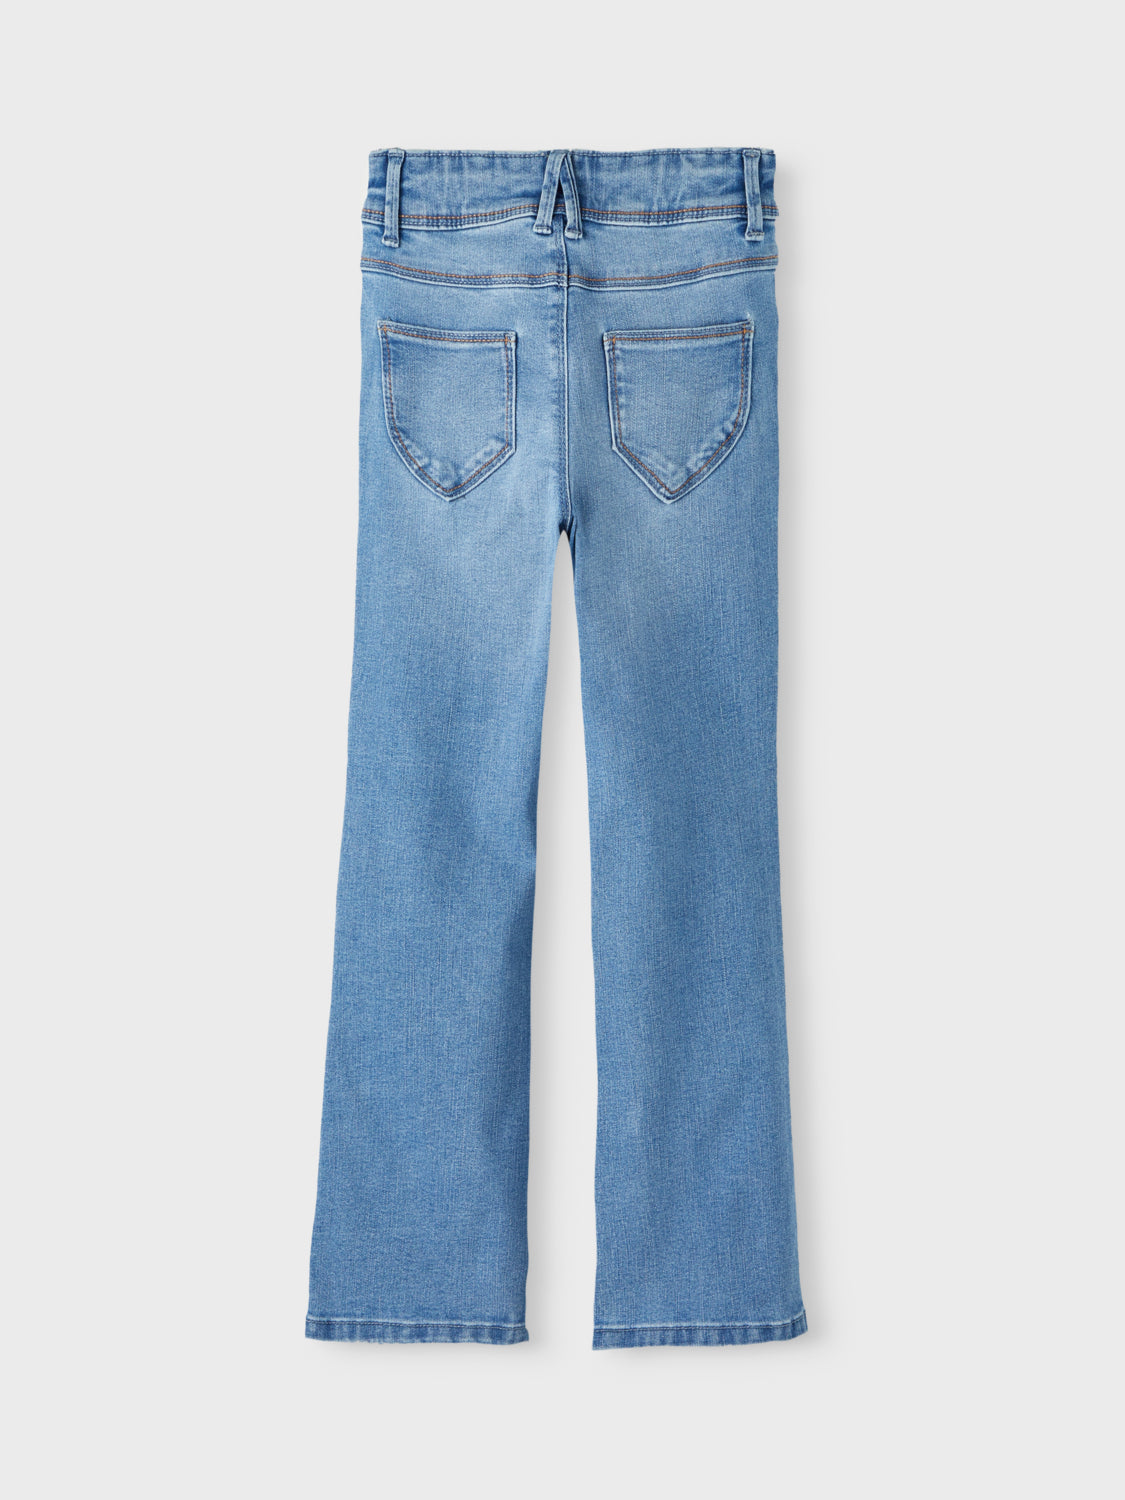 NKFPOLLY Jeans - Medium Blue Denim